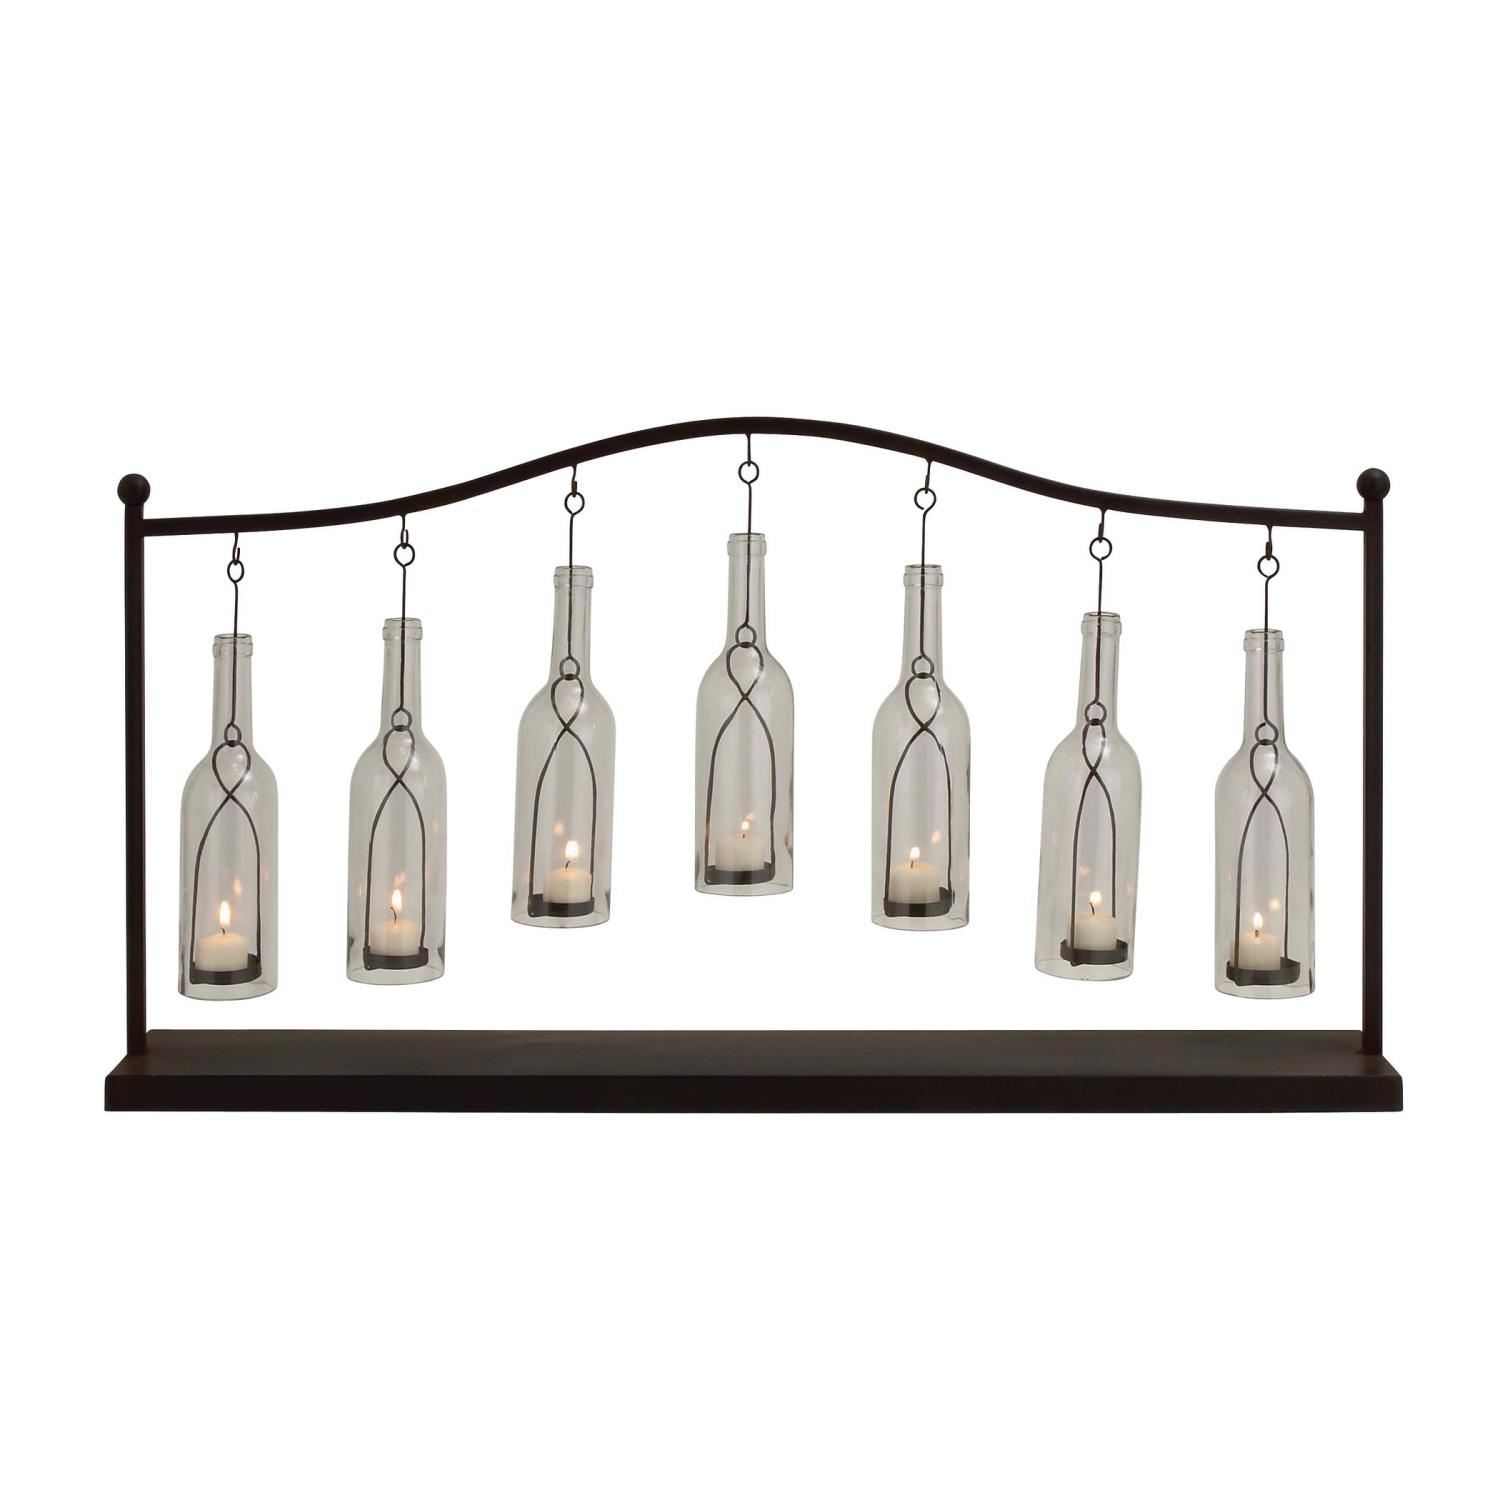 Zimlay Glass Bottles On Iron Stand Seven-Light Votive Candle Holder 55535